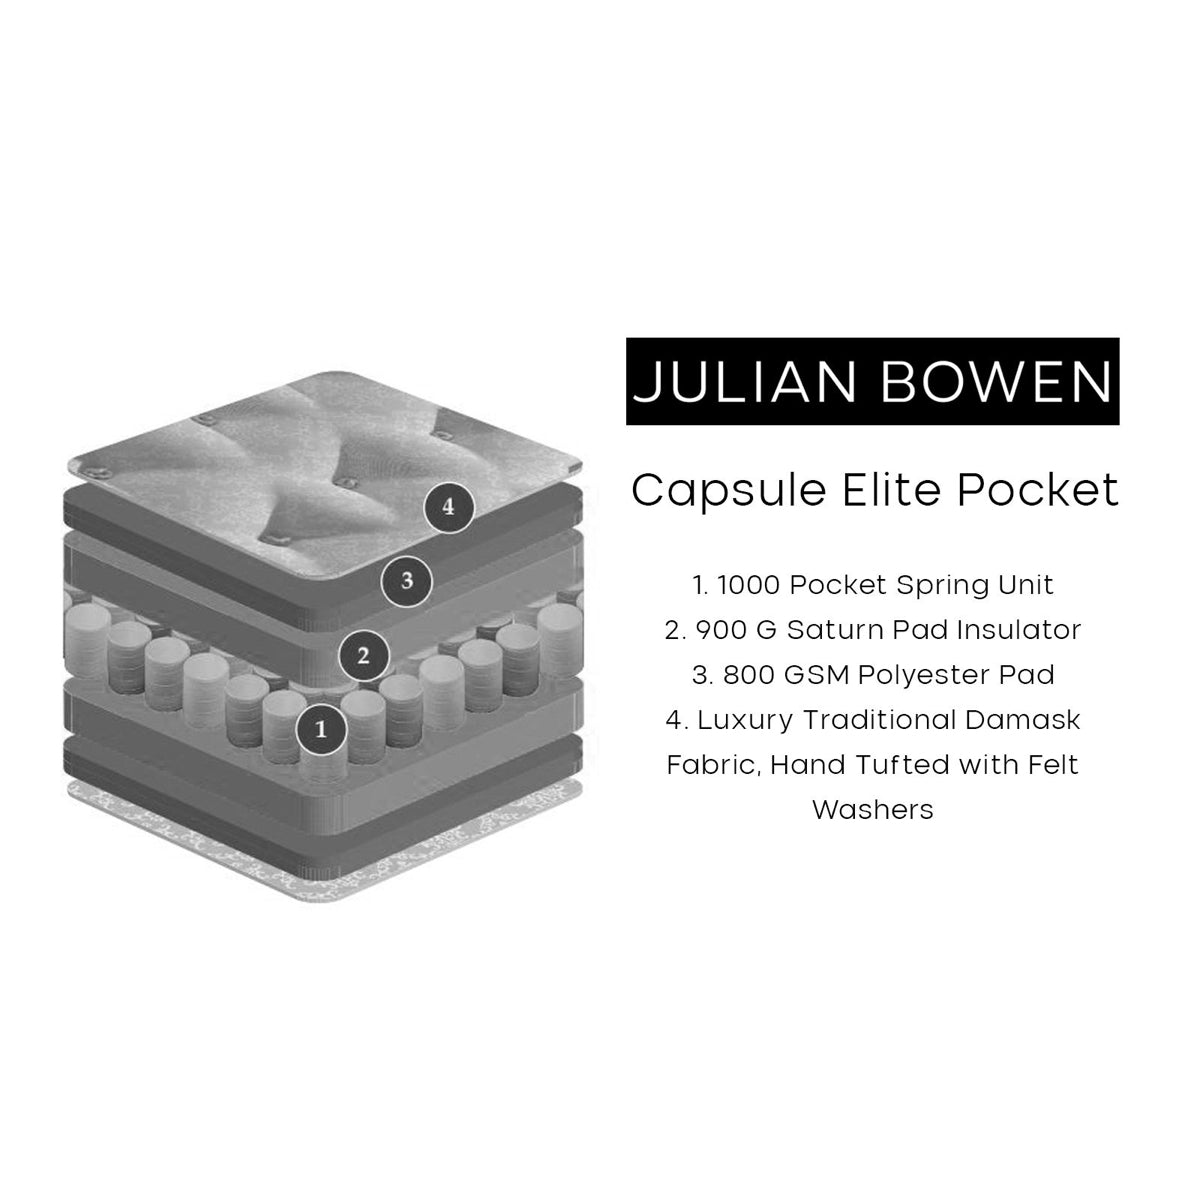 Julian Bowen, Capsule Elite Pocket 6ft Super King Size Mattress